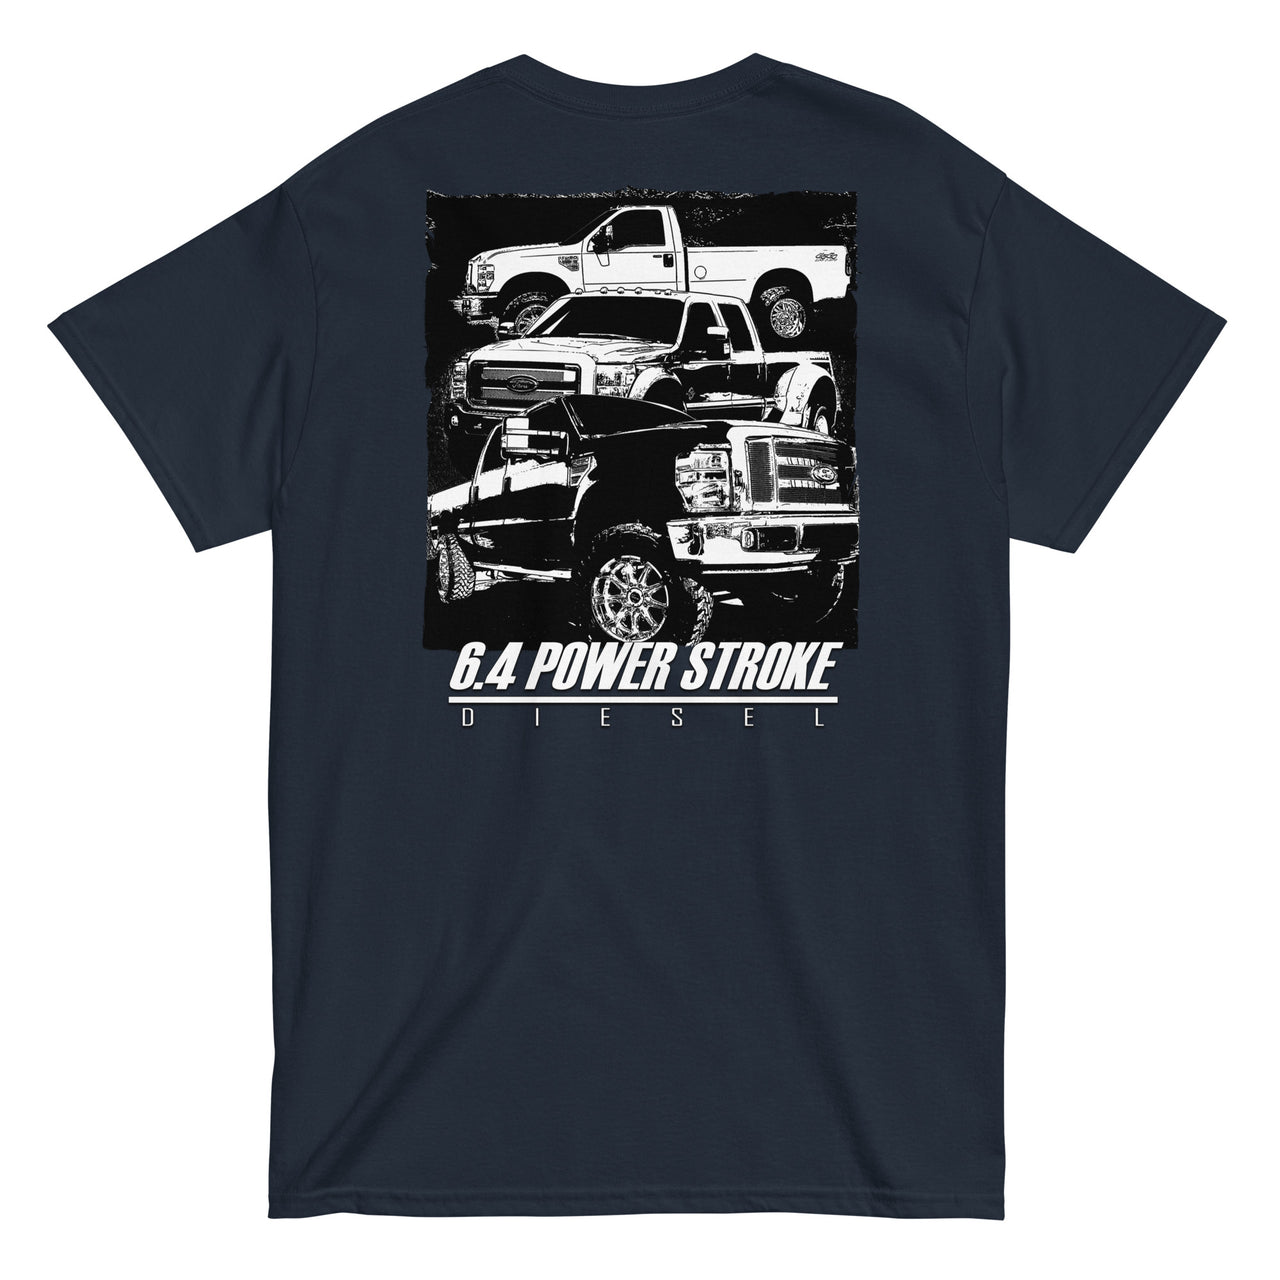 6.4 Power Stroke Trucks t-shirt in navy